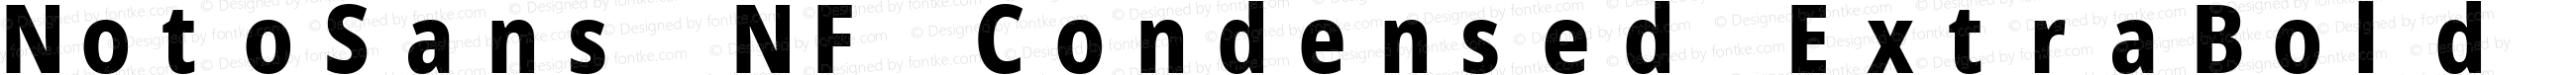 Noto Sans Condensed ExtraBold Nerd Font Complete Mono Windows Compatible